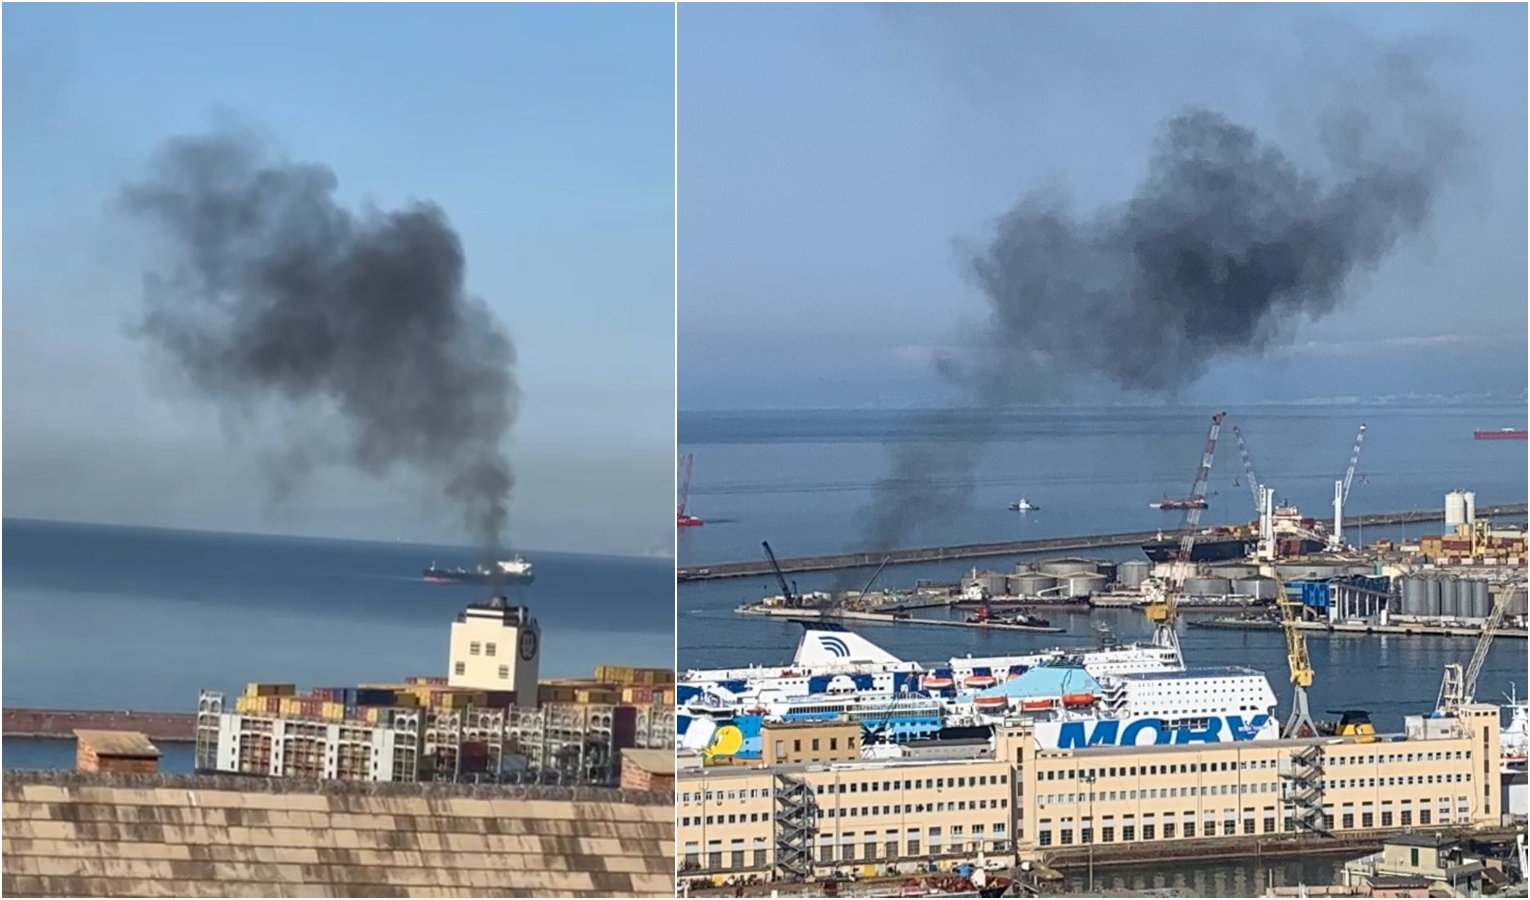 Inquinamento a Genova e fumo navi: giovedì l'osservatorio Ambiente-Salute